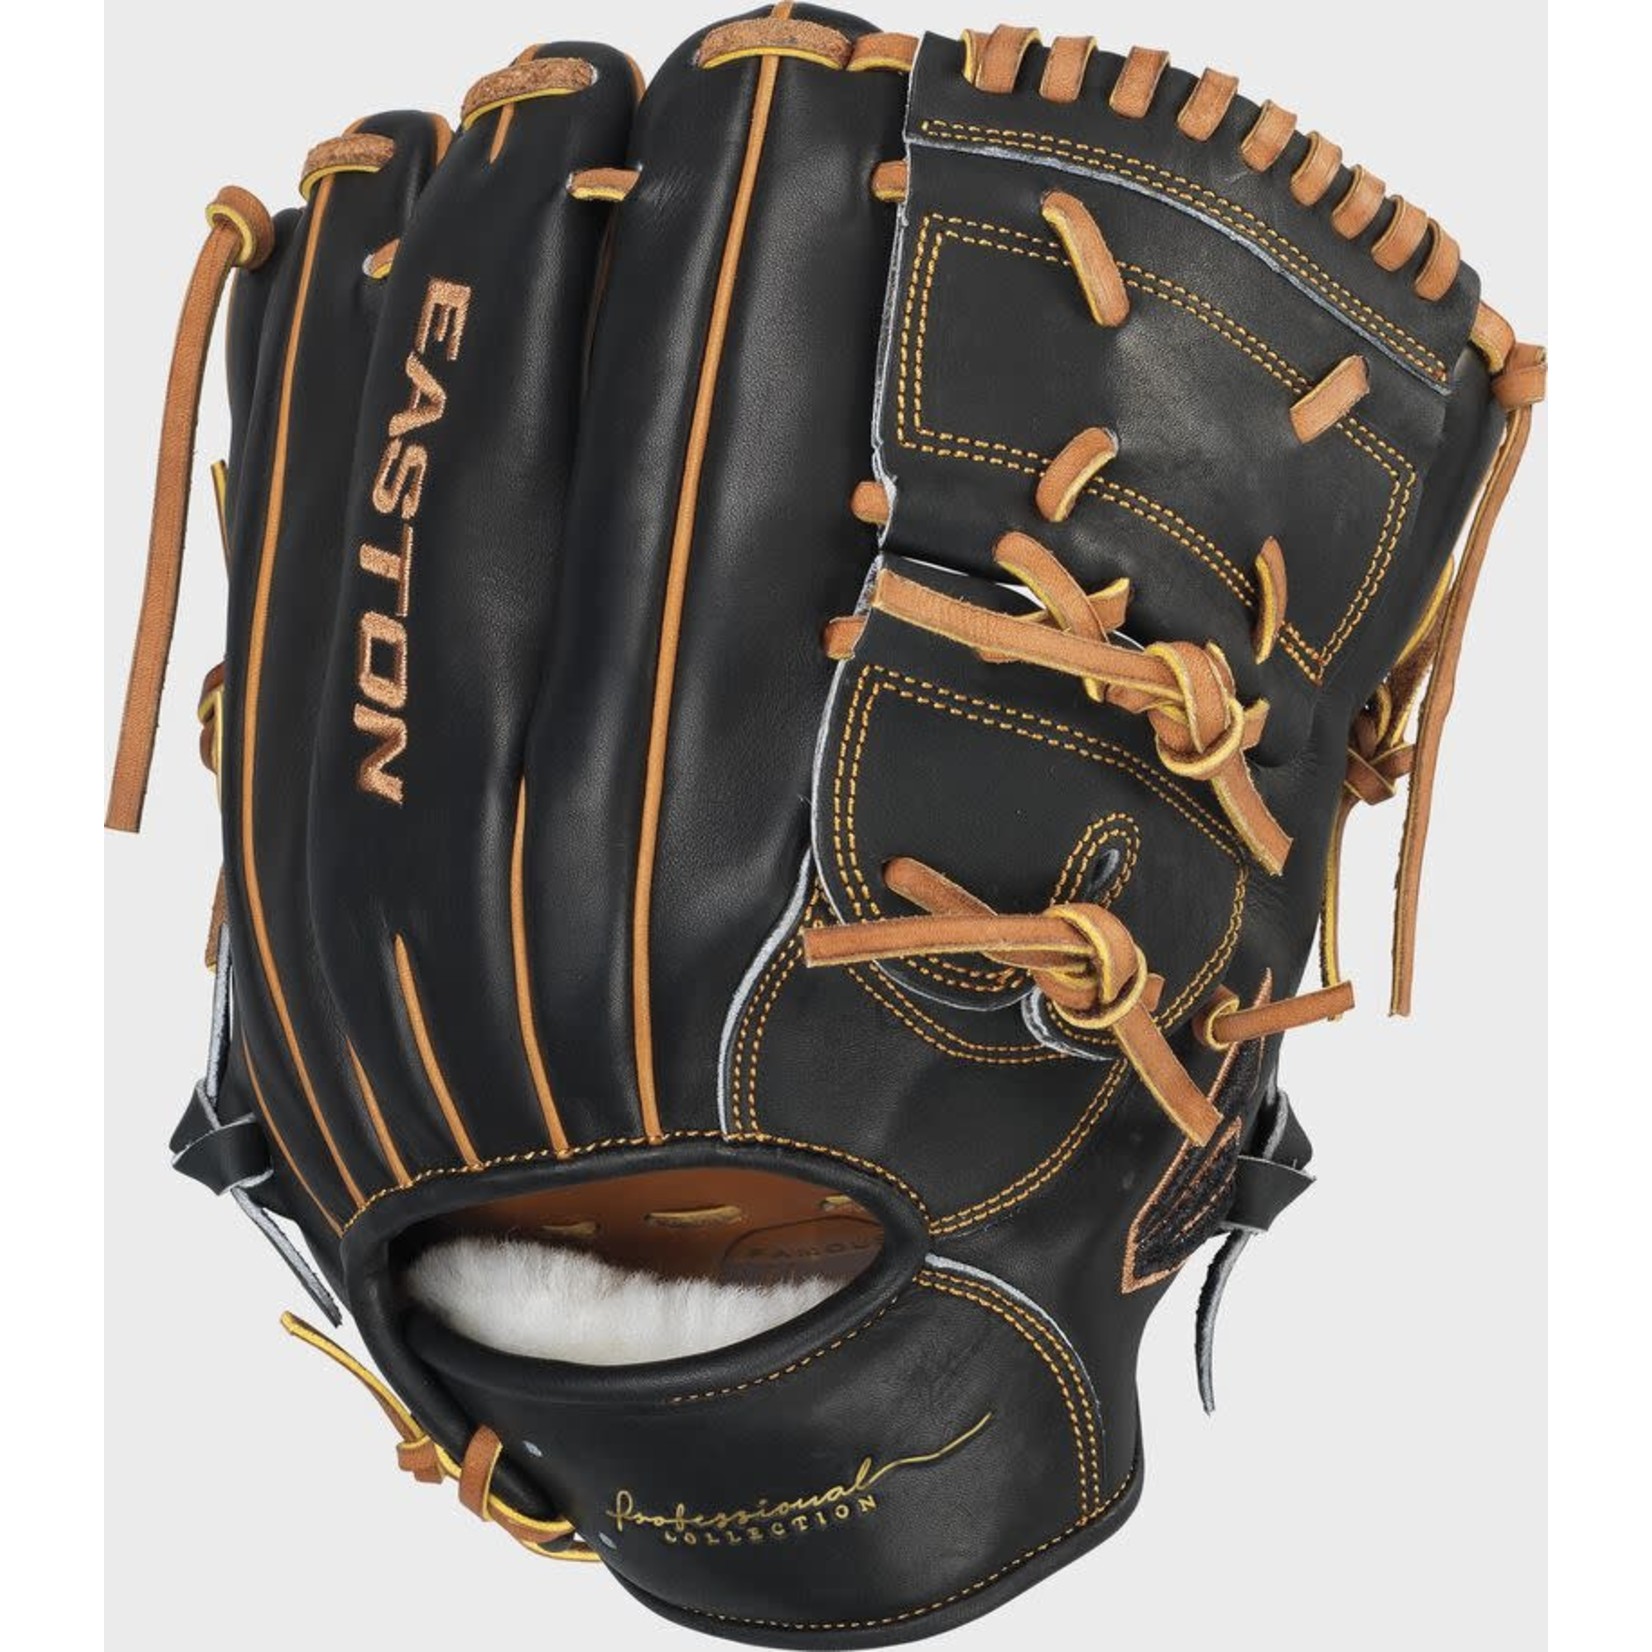 Easton Professional Hybrid 11.75in Baseball Glove